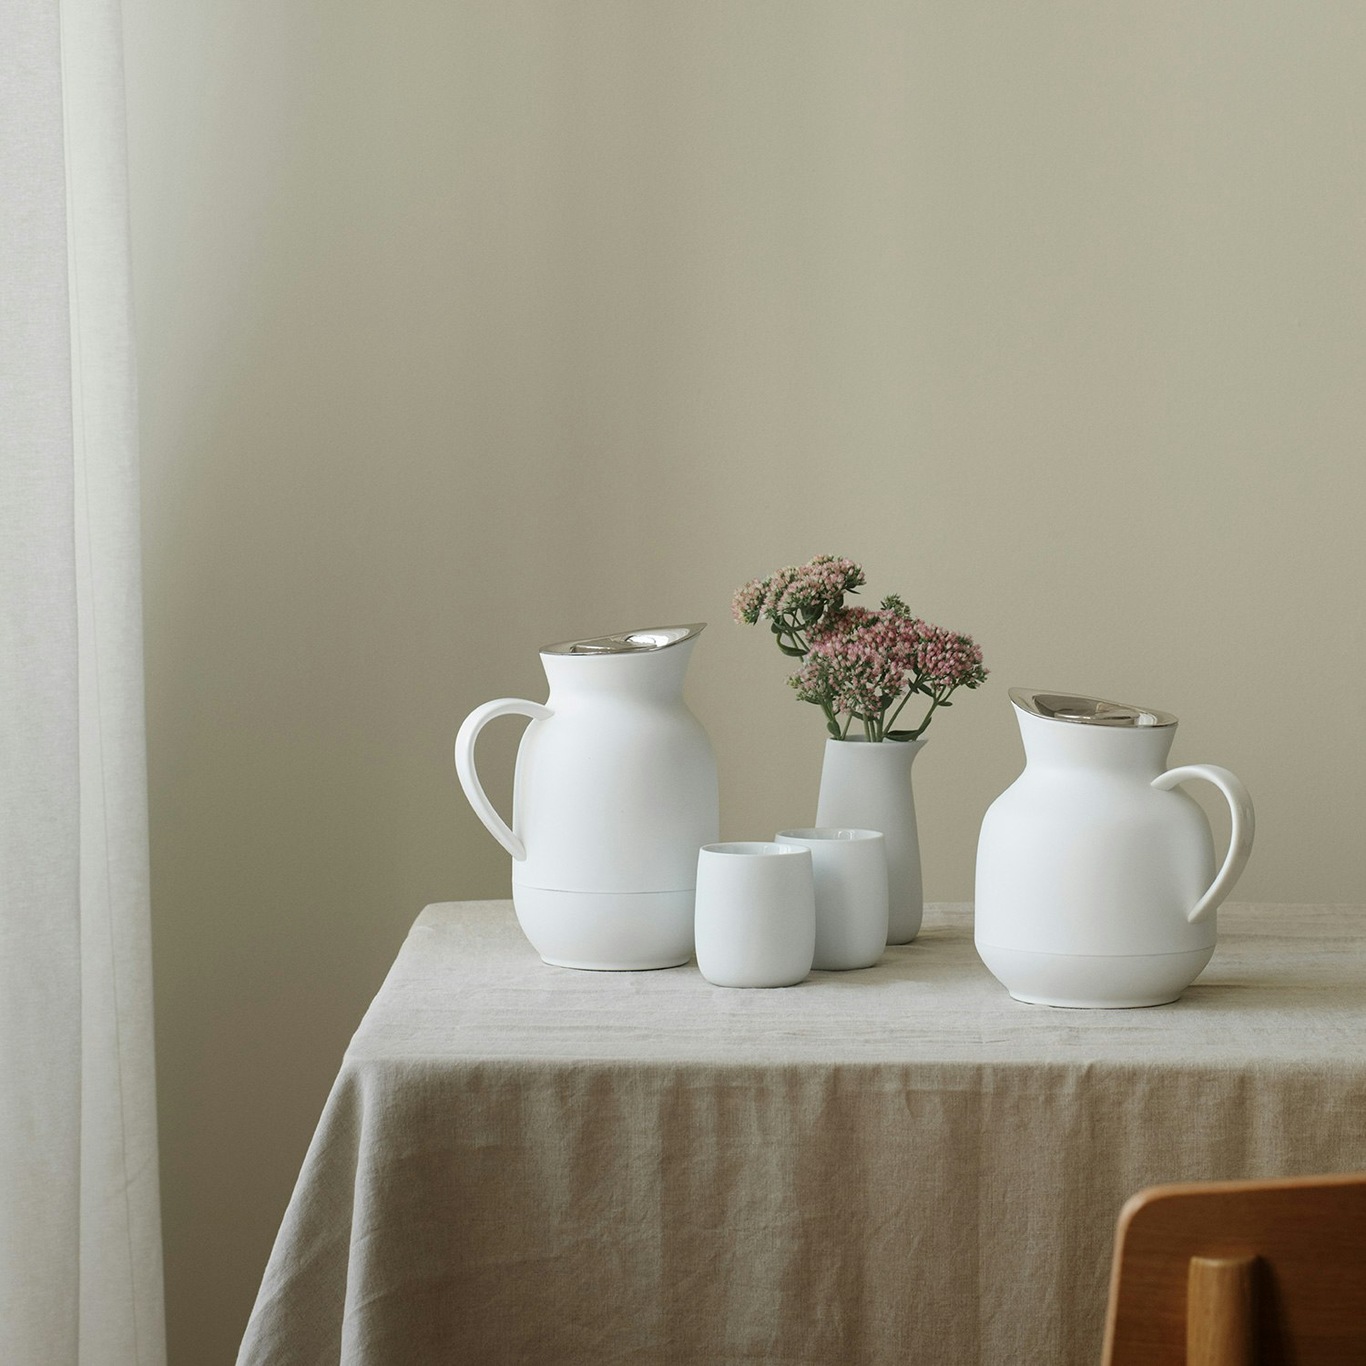 https://royaldesign.com/image/2/stelton-amphora-coffee-pot-1-l-2?w=800&quality=80